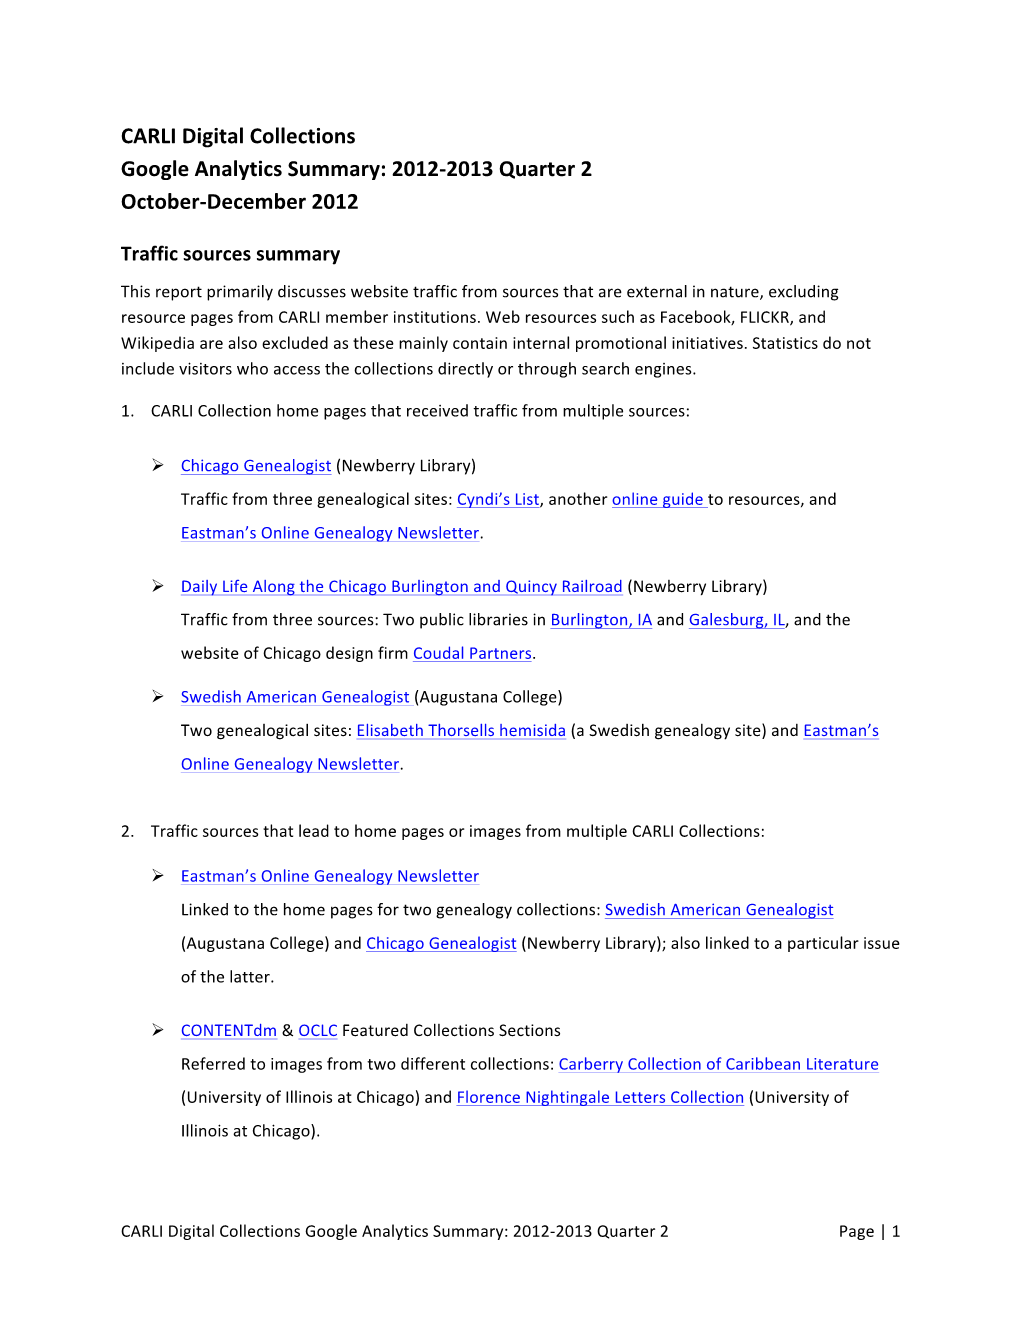 CARLI Digital Collections Google Analytics Summary: 2012-‐2013